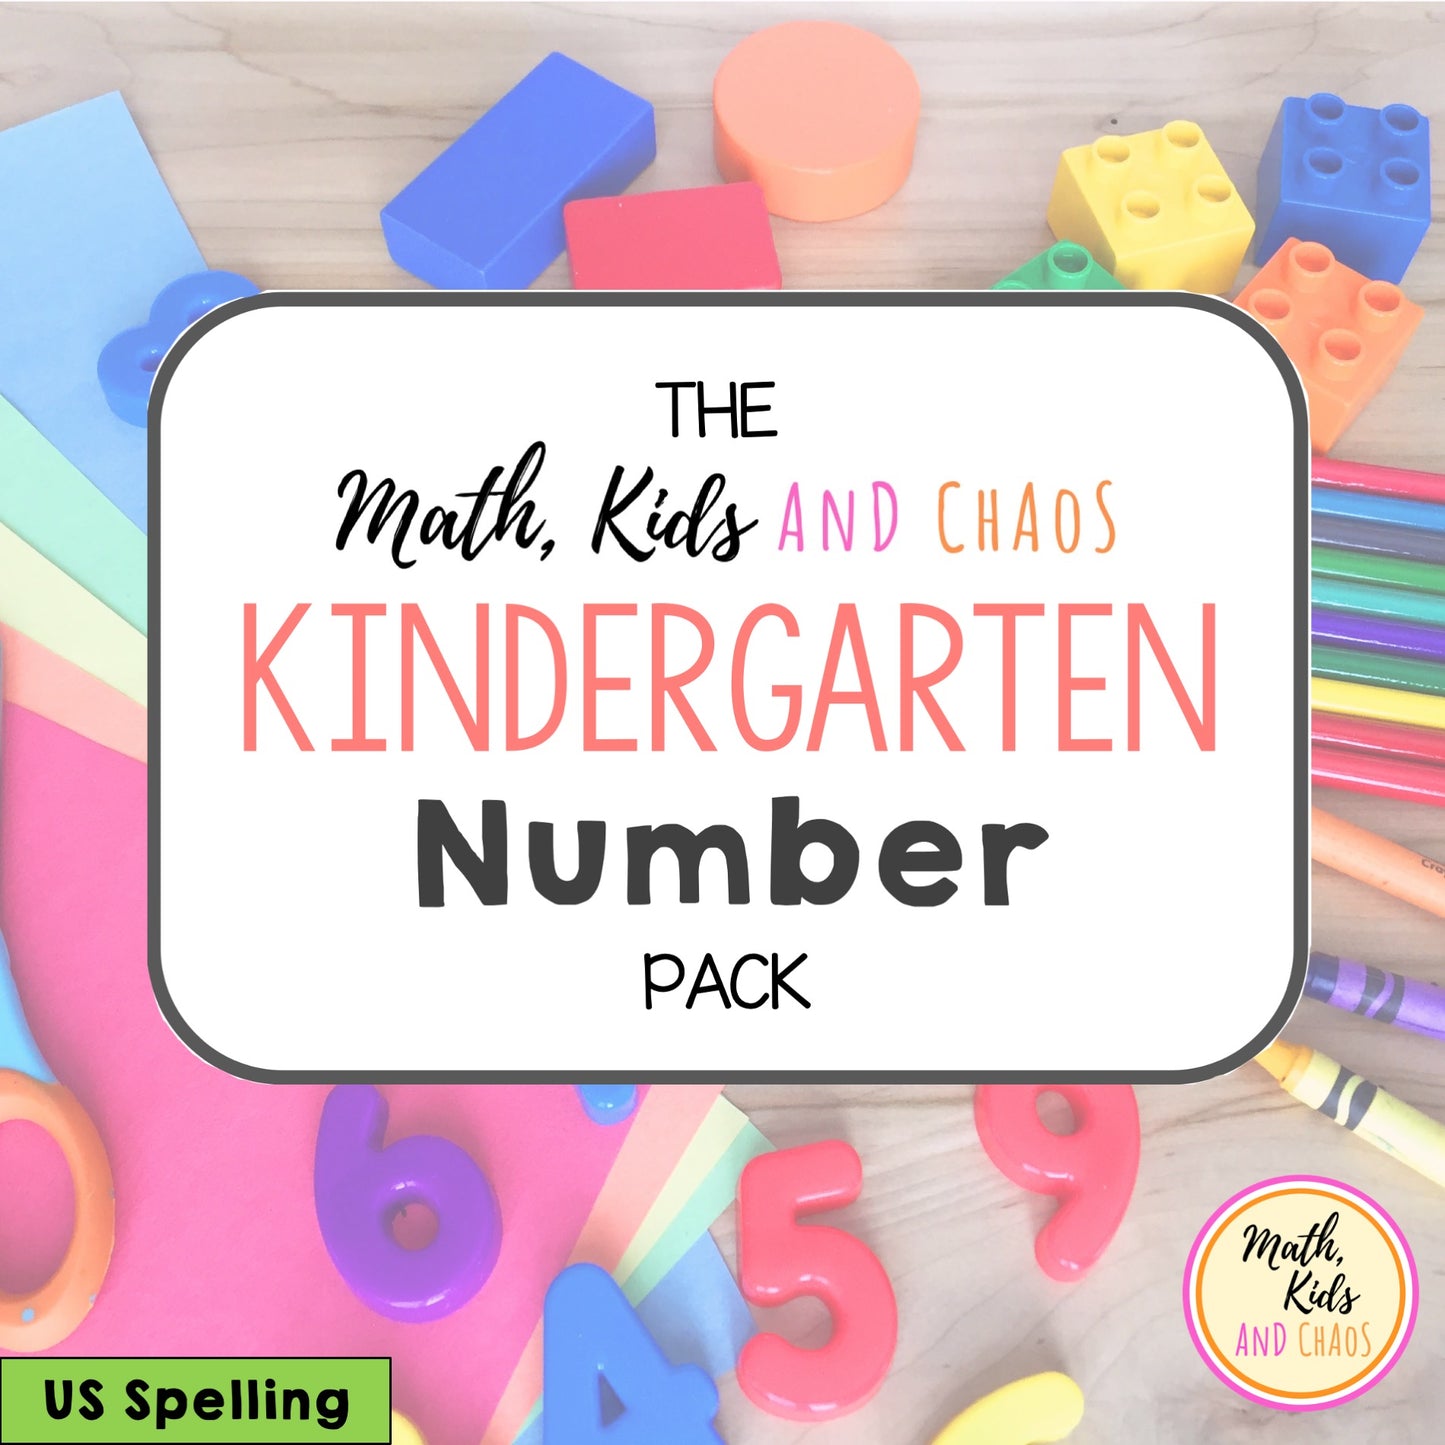 Kindergarten Number Pack (US Spelling)